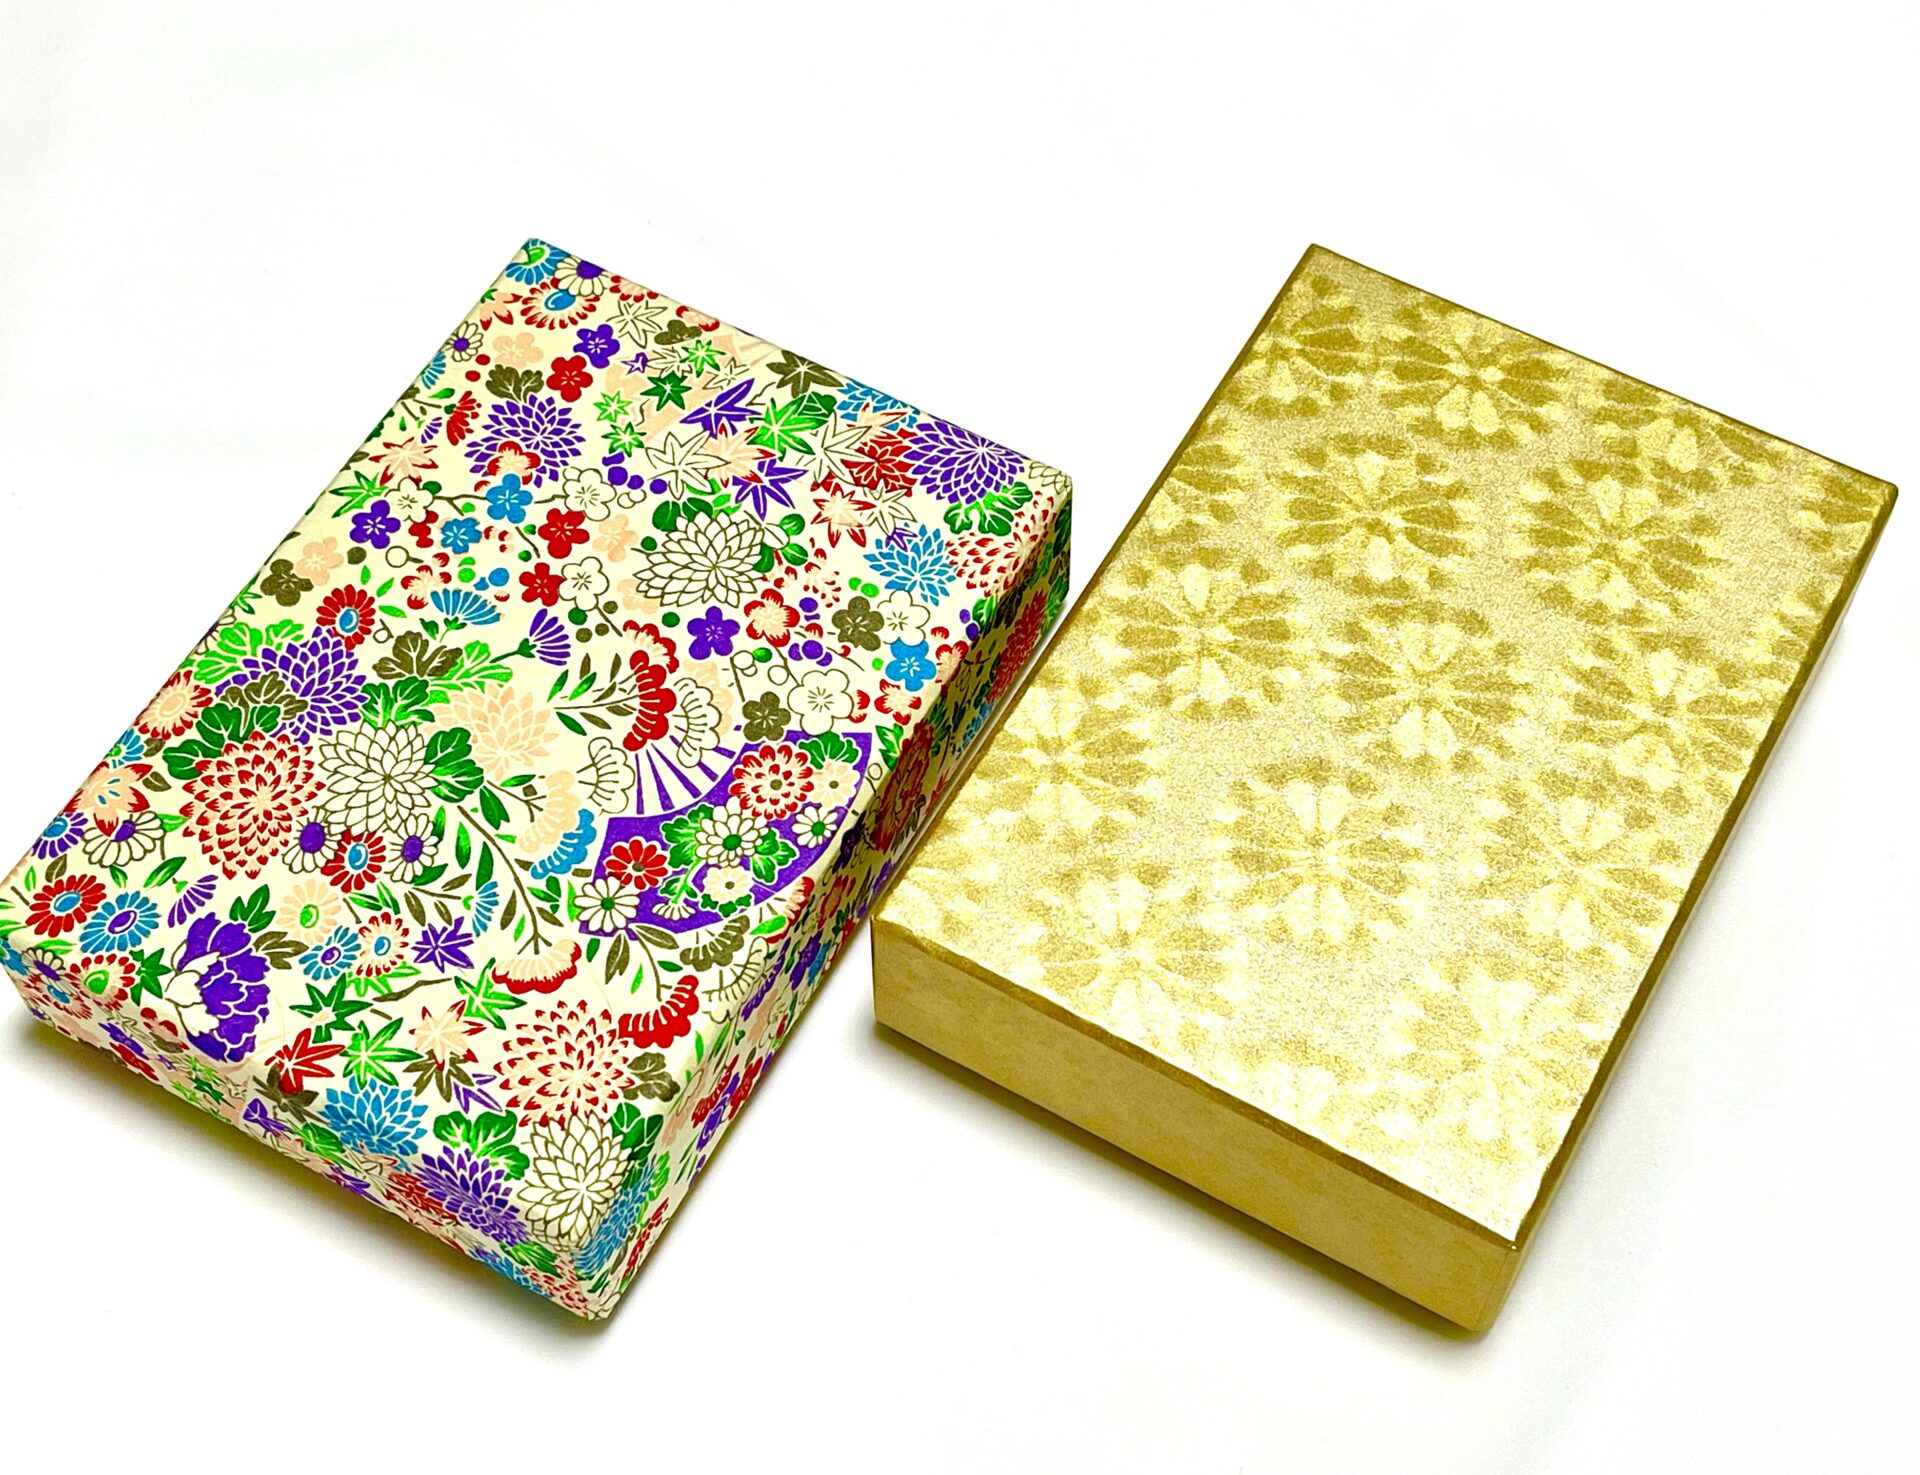 Kimono pattern "Washi" Paper Box